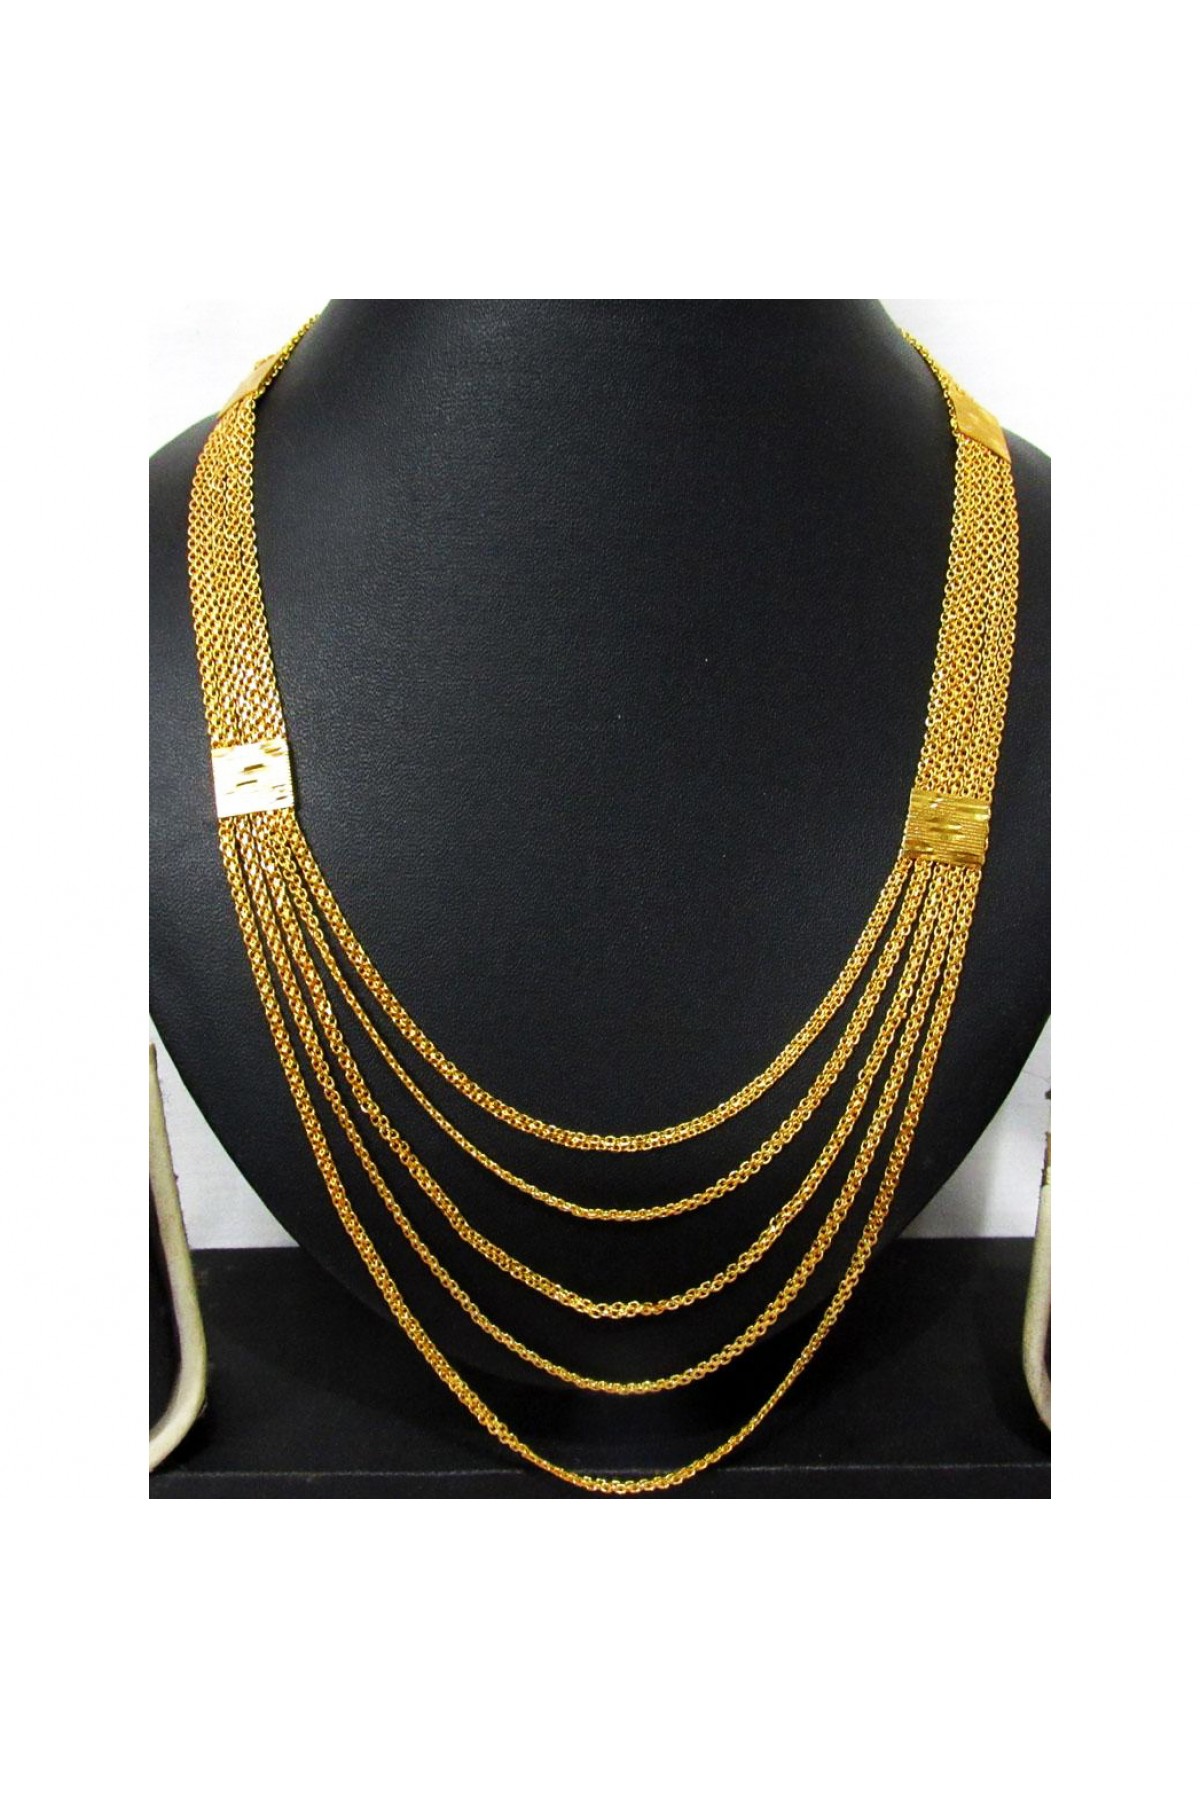 Five Line Golden Chain Long Necklace